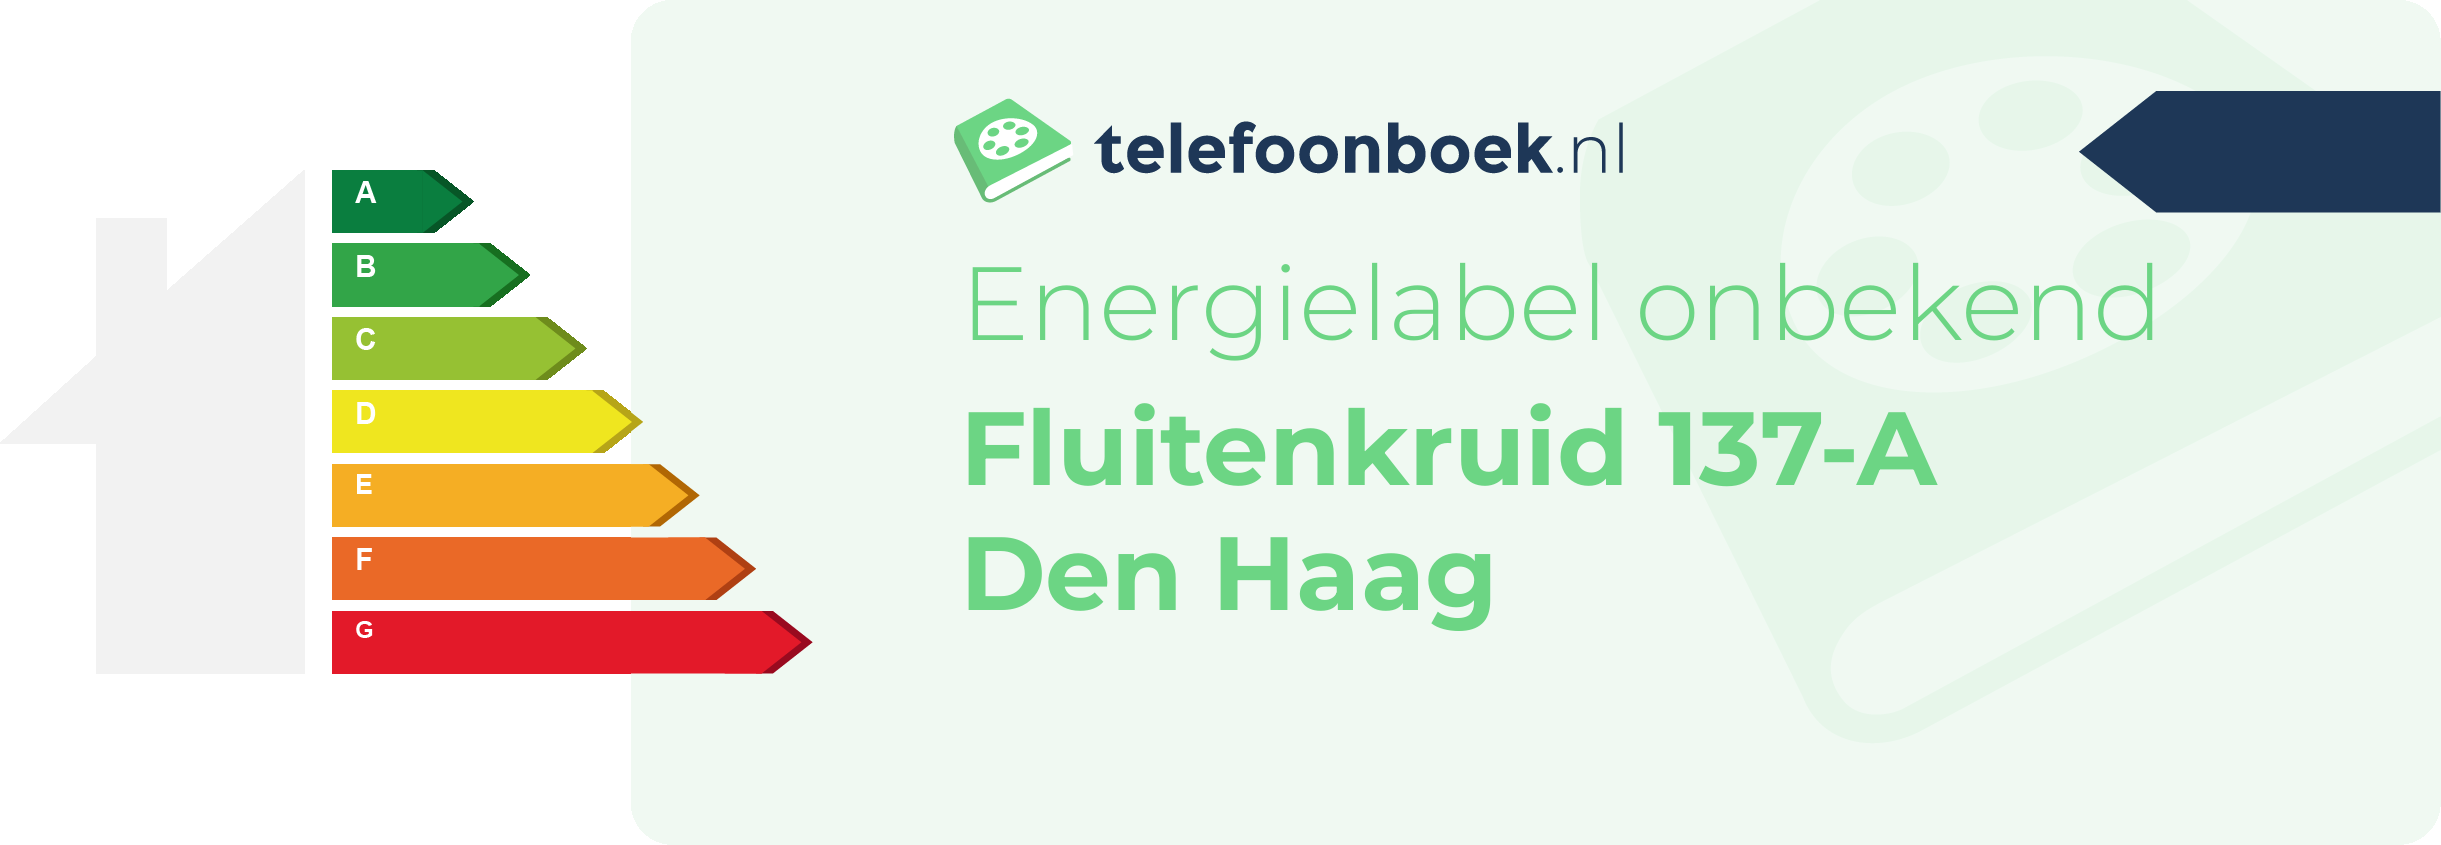 Energielabel Fluitenkruid 137-A Den Haag